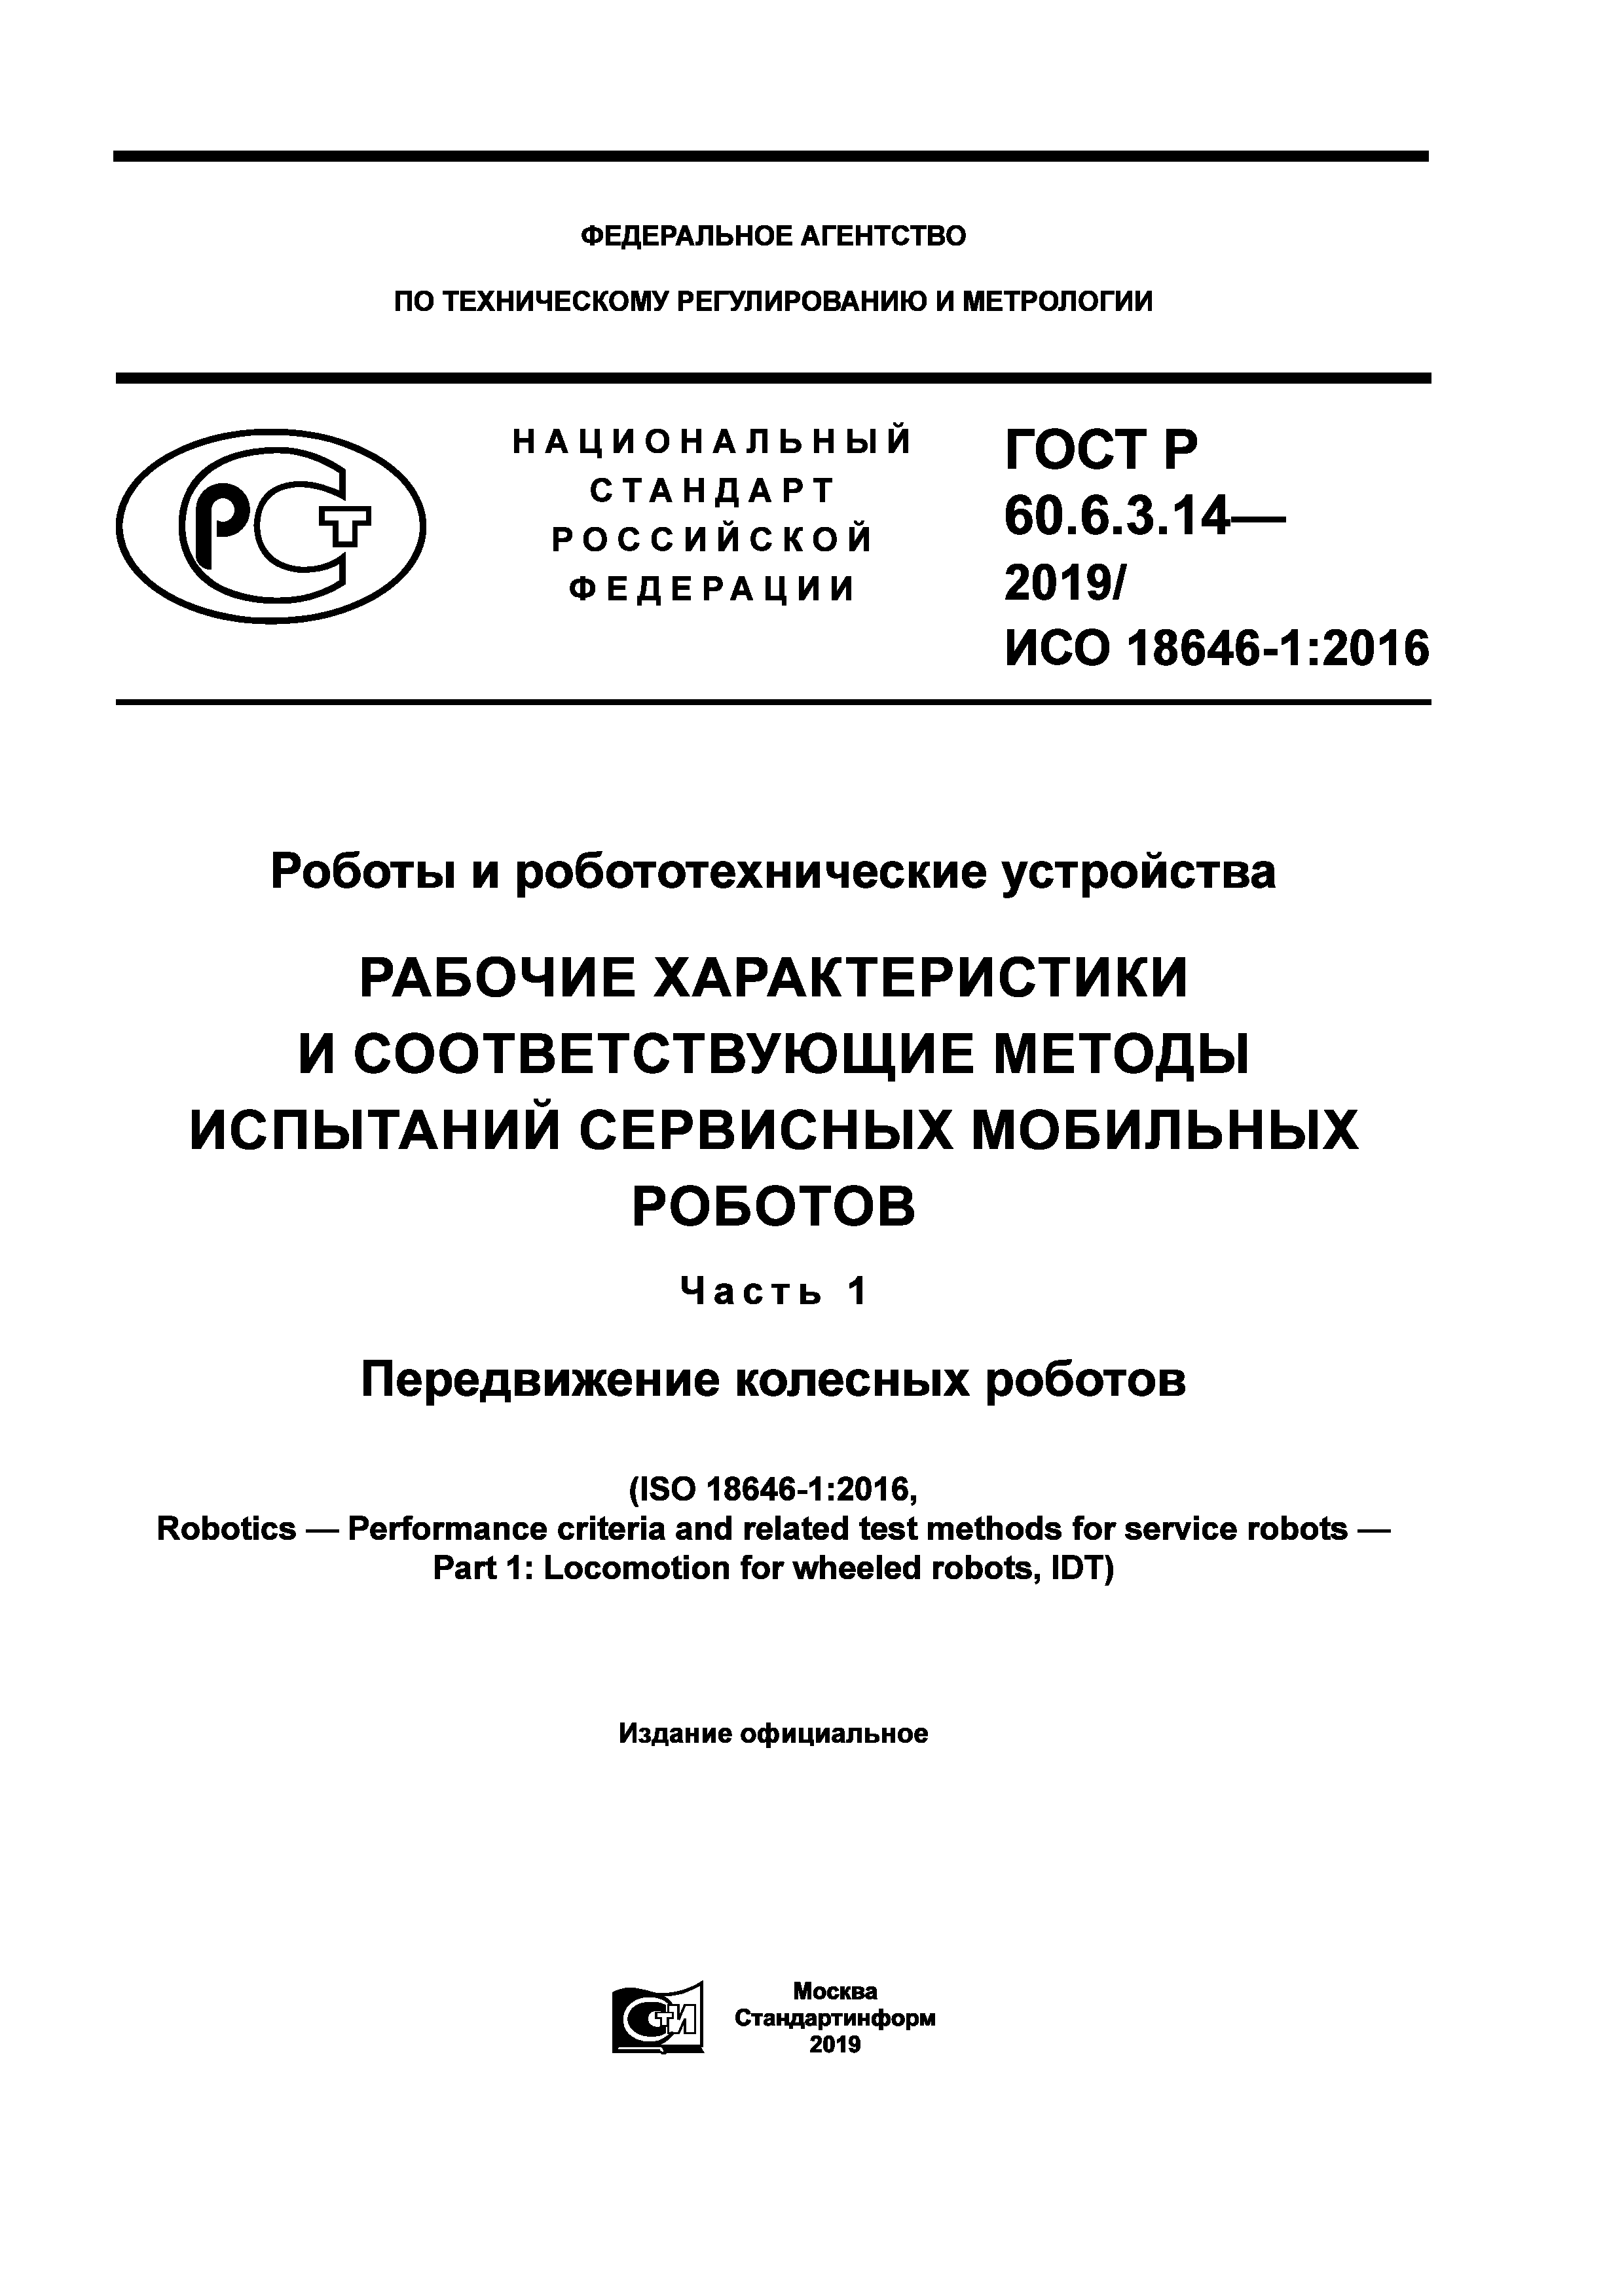 ГОСТ Р 60.6.3.14-2019